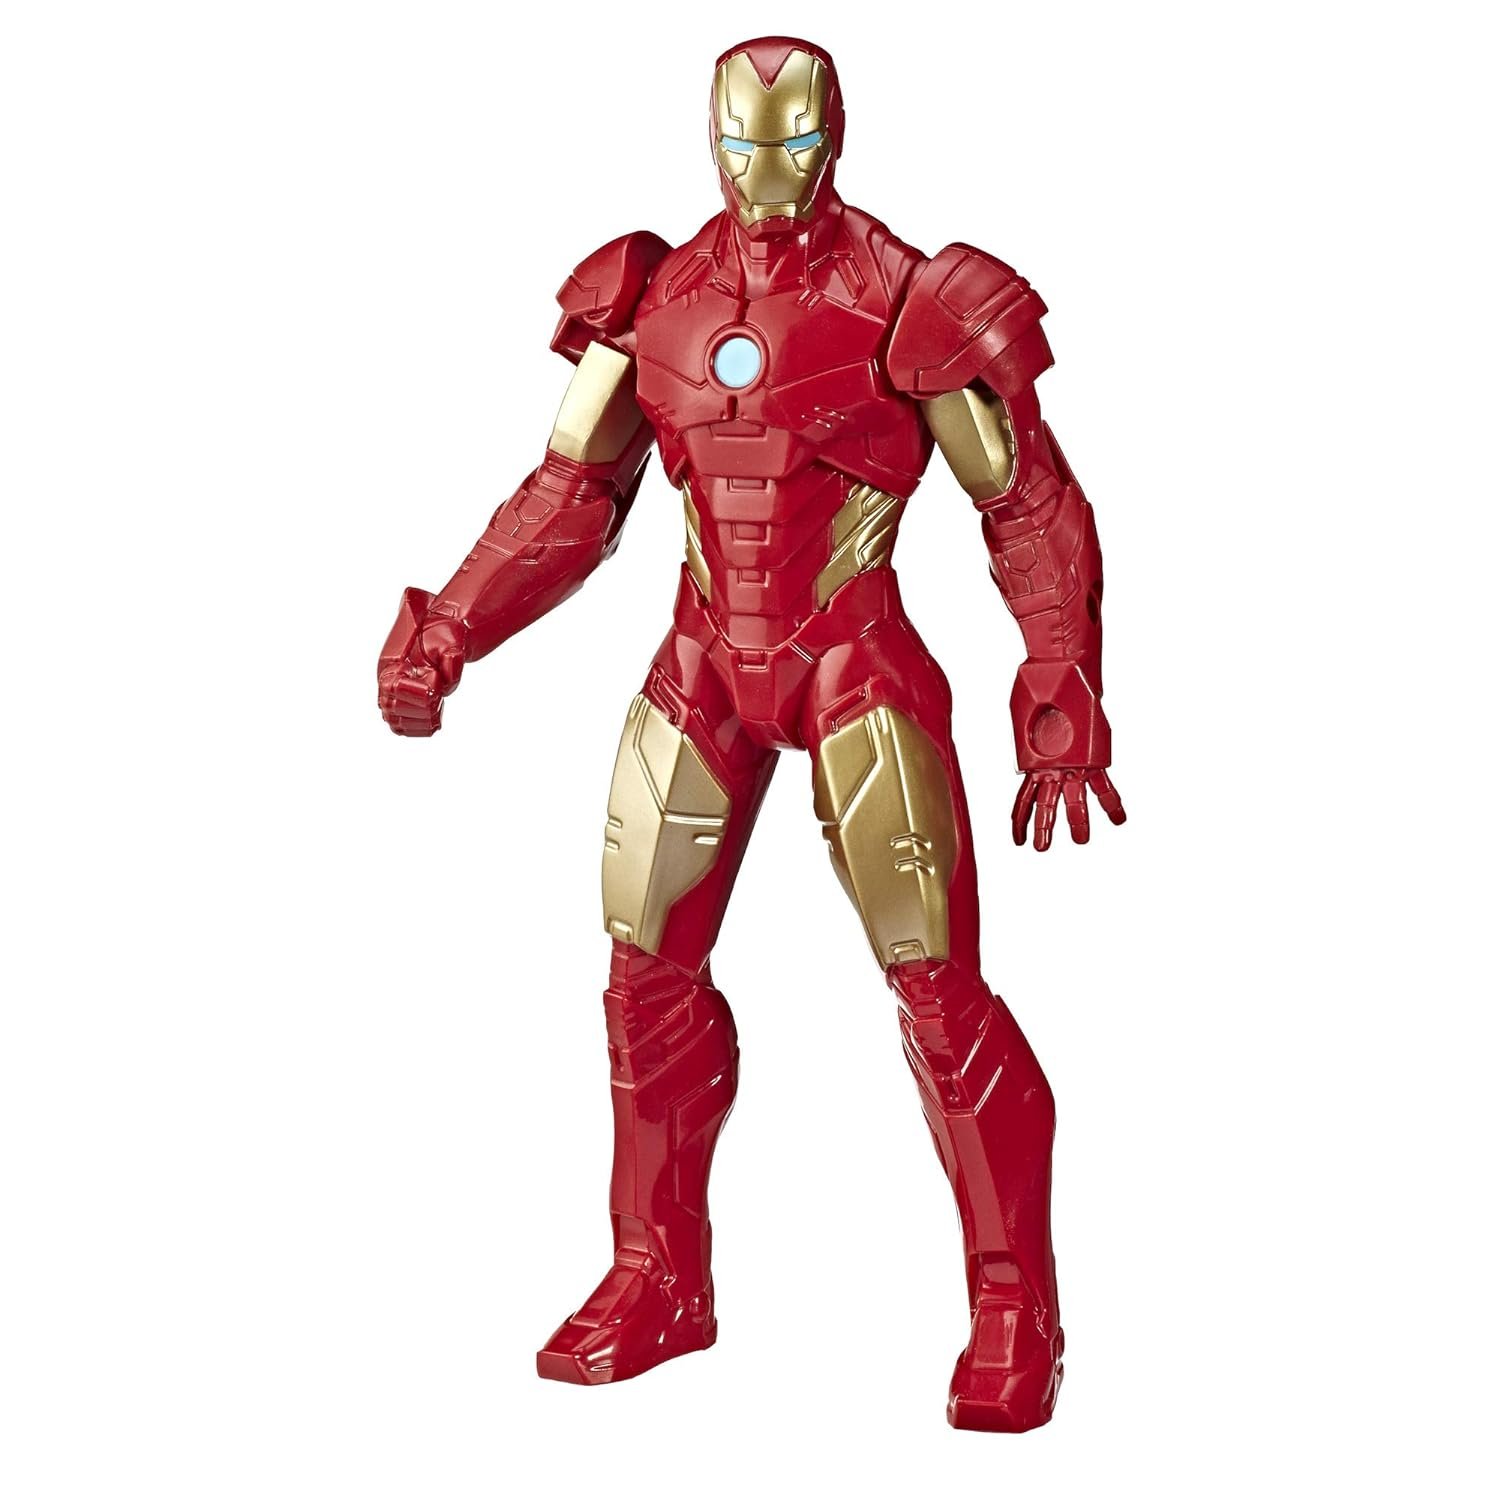 Marvel Iron Man Action Figure image 1